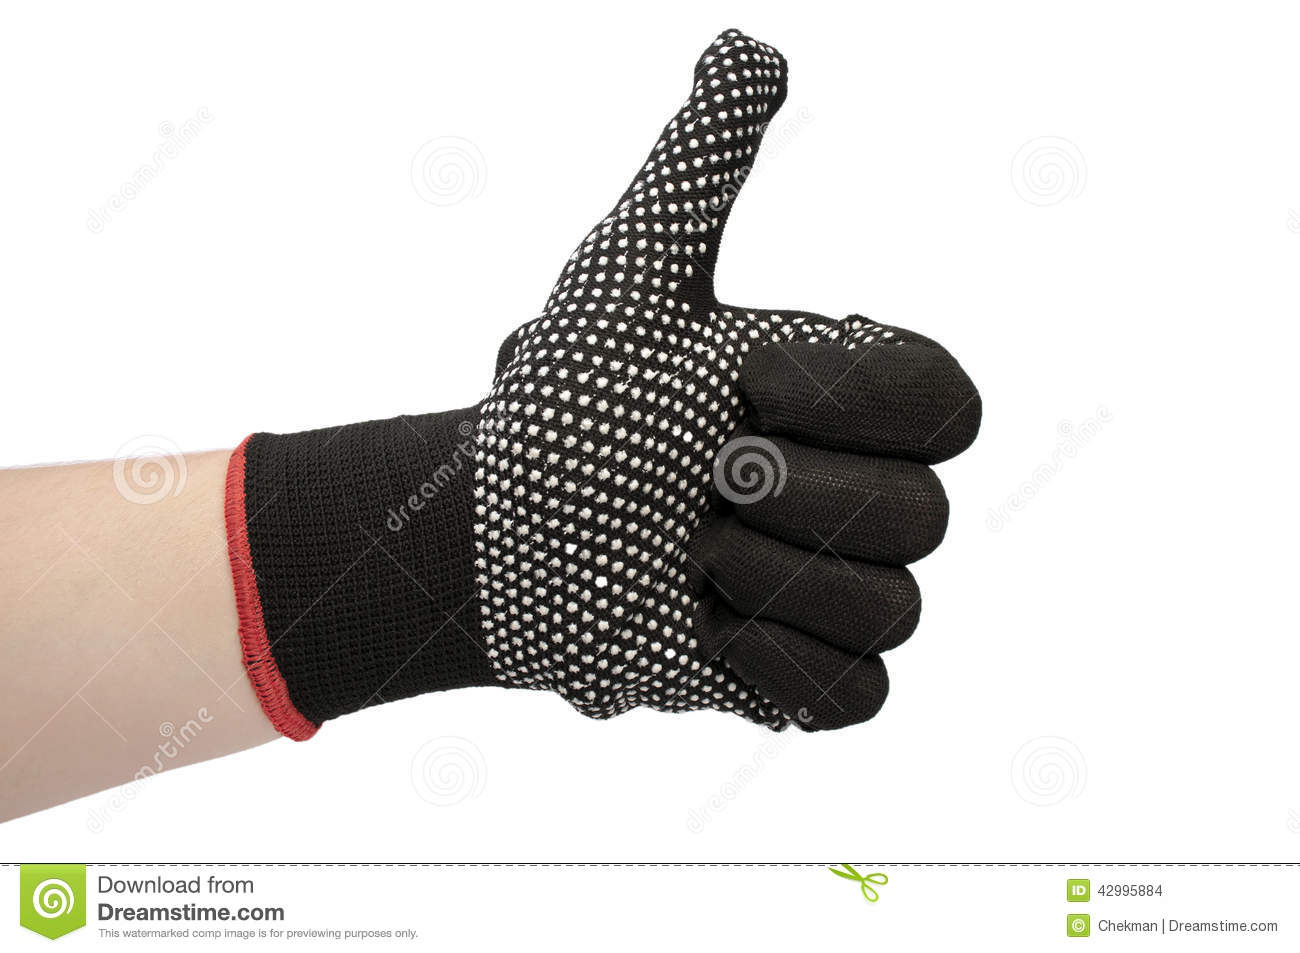 Black Work Gloves Isolated On White Background Simple Work Gloves